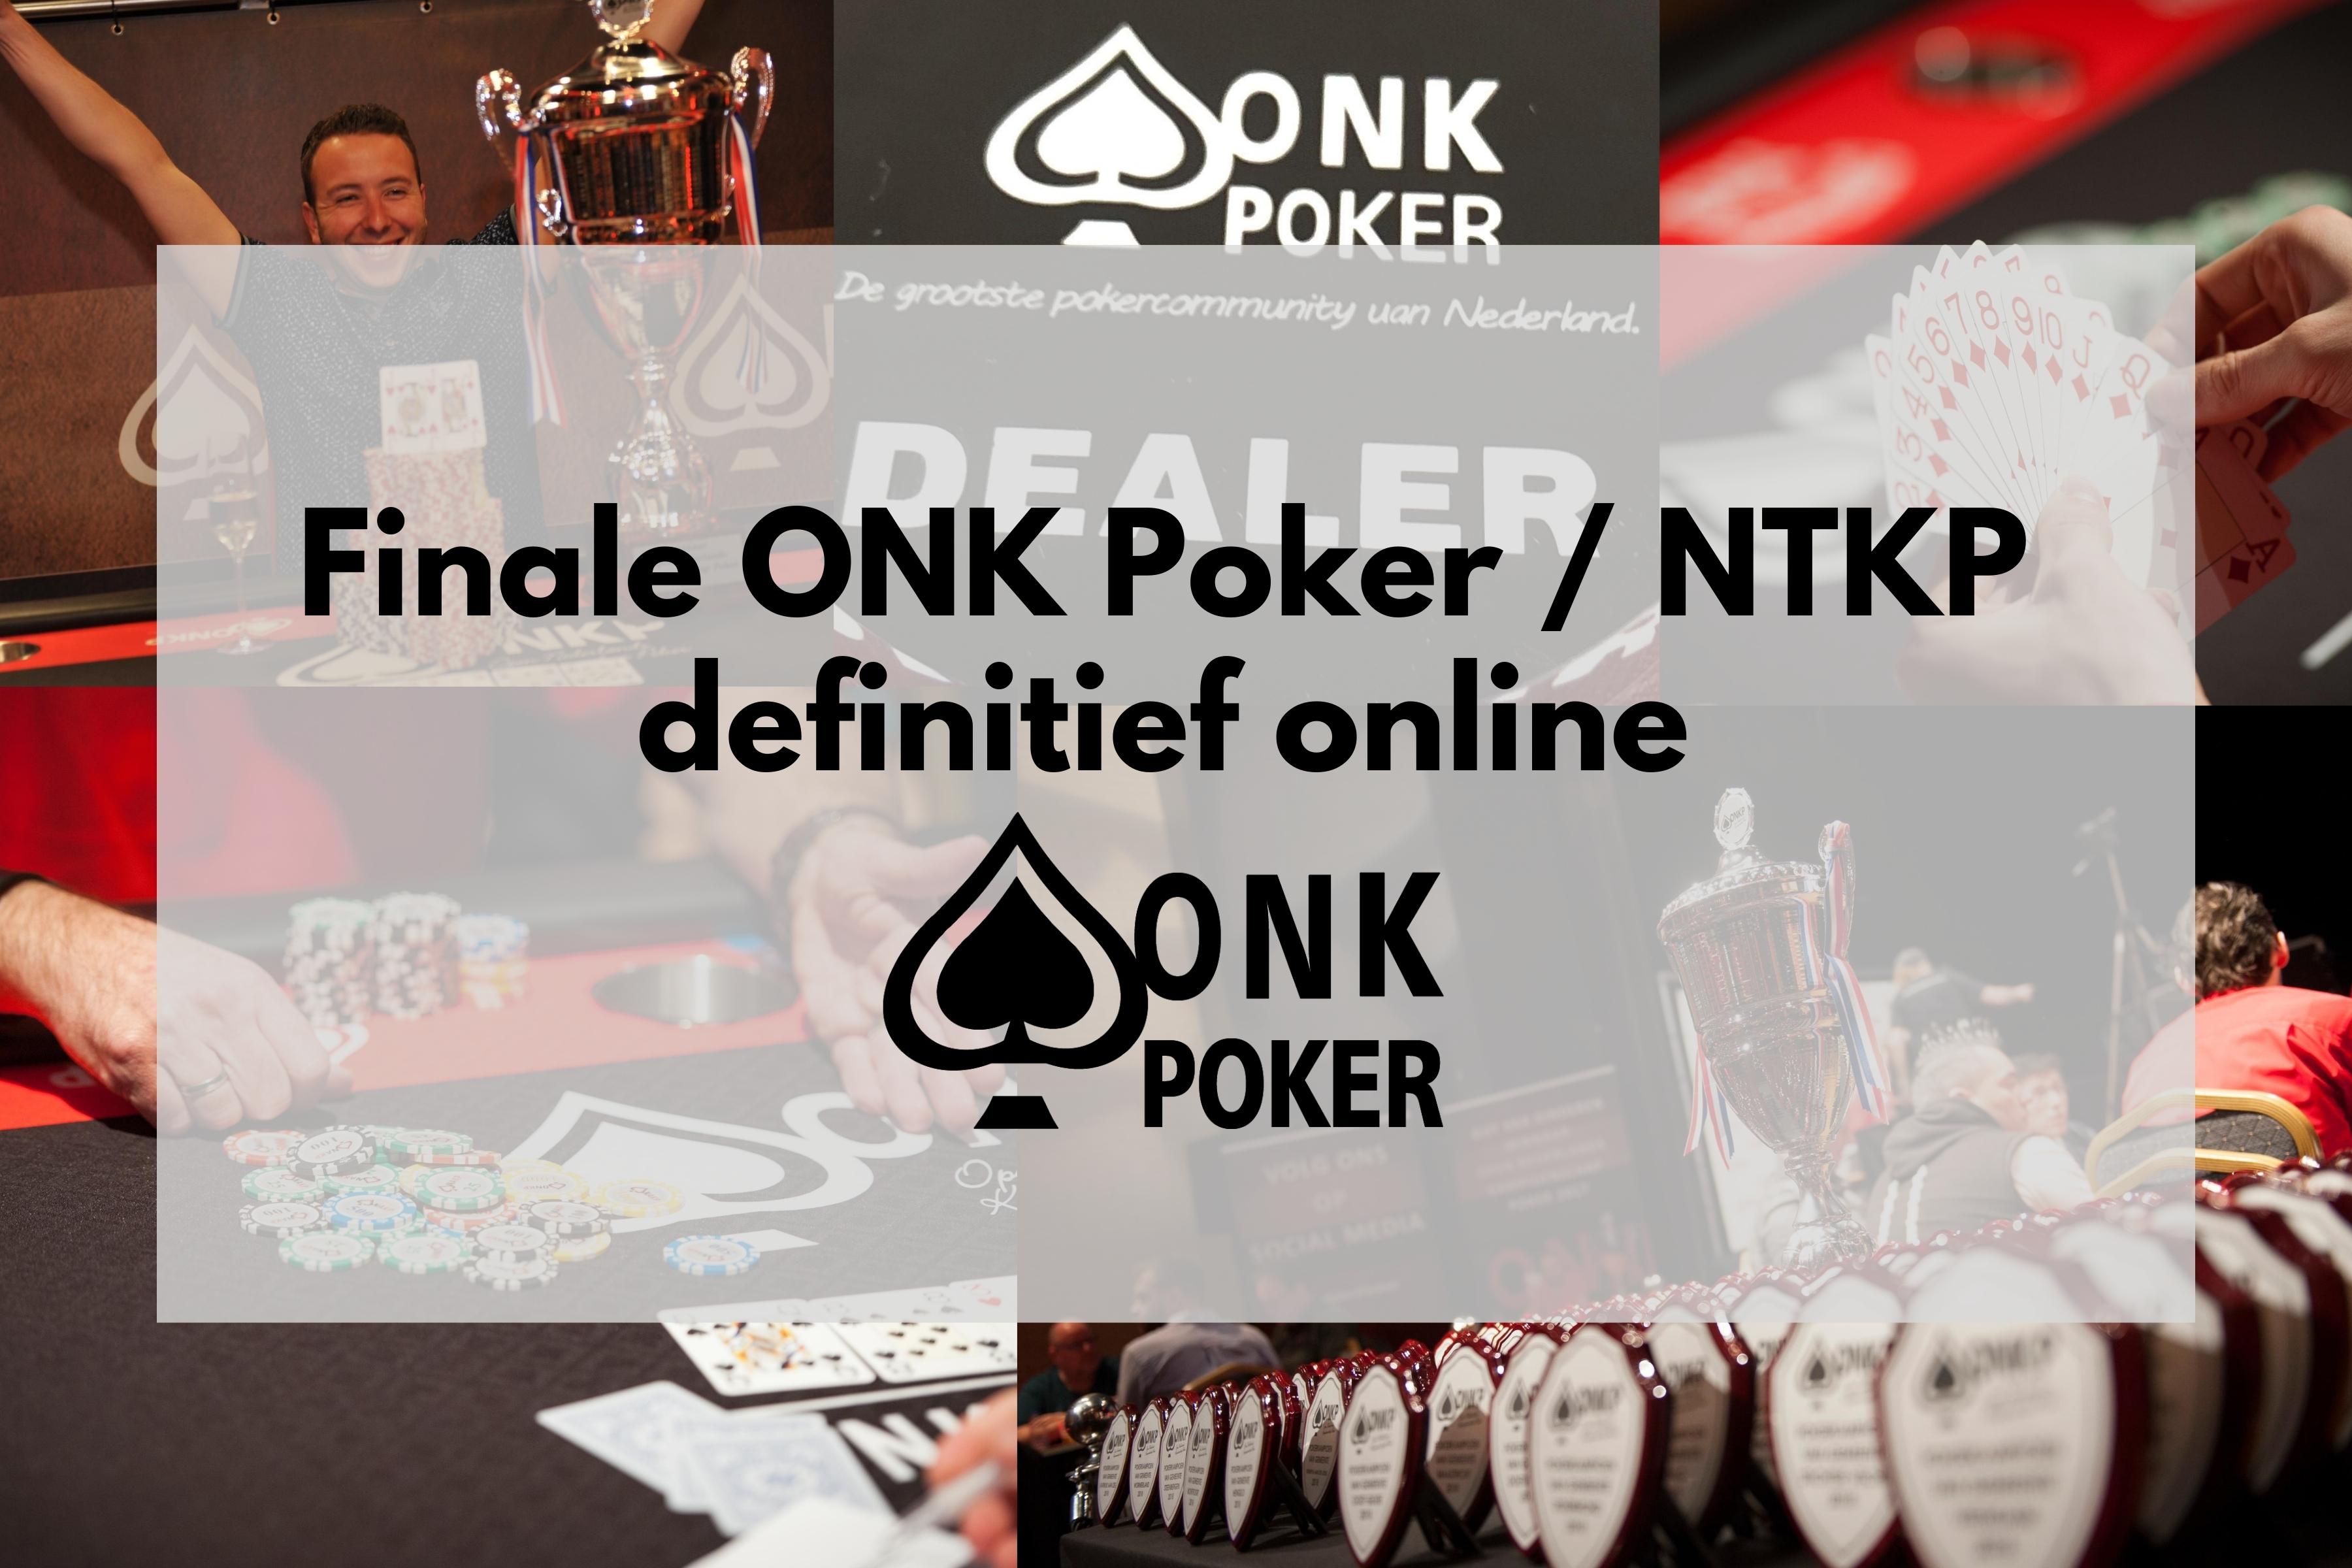 Finales ONK Poker en NTKP definitief online